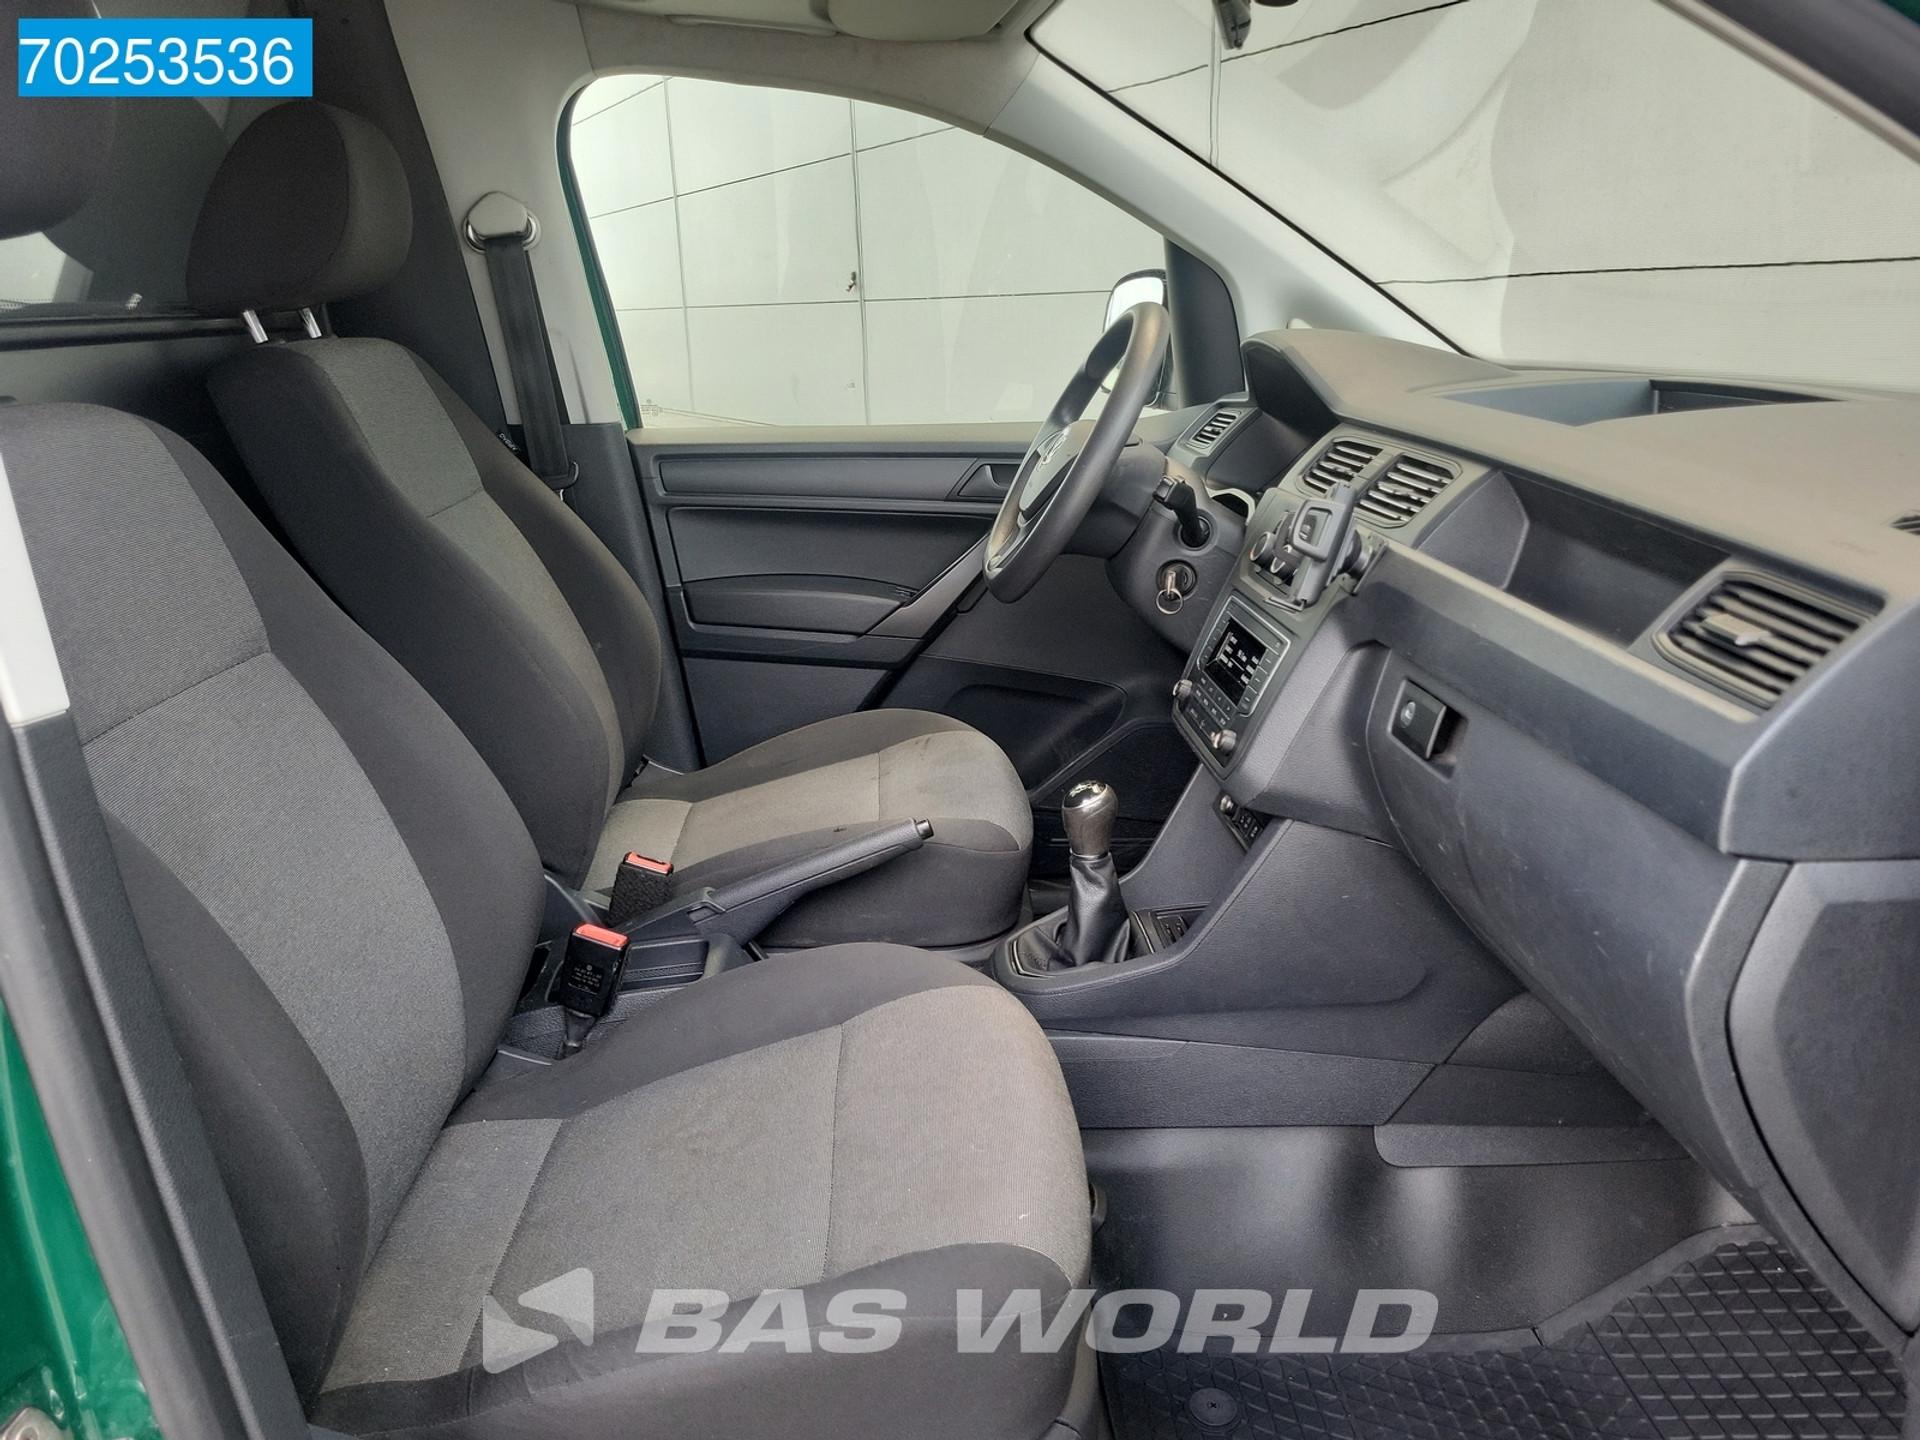 Foto 13 van Volkswagen Euro6 4x4 Airco Cruise Parkeersensoren 4Motion 4WD 4 Motion 3m3 Airco Trekhaak Cruise control